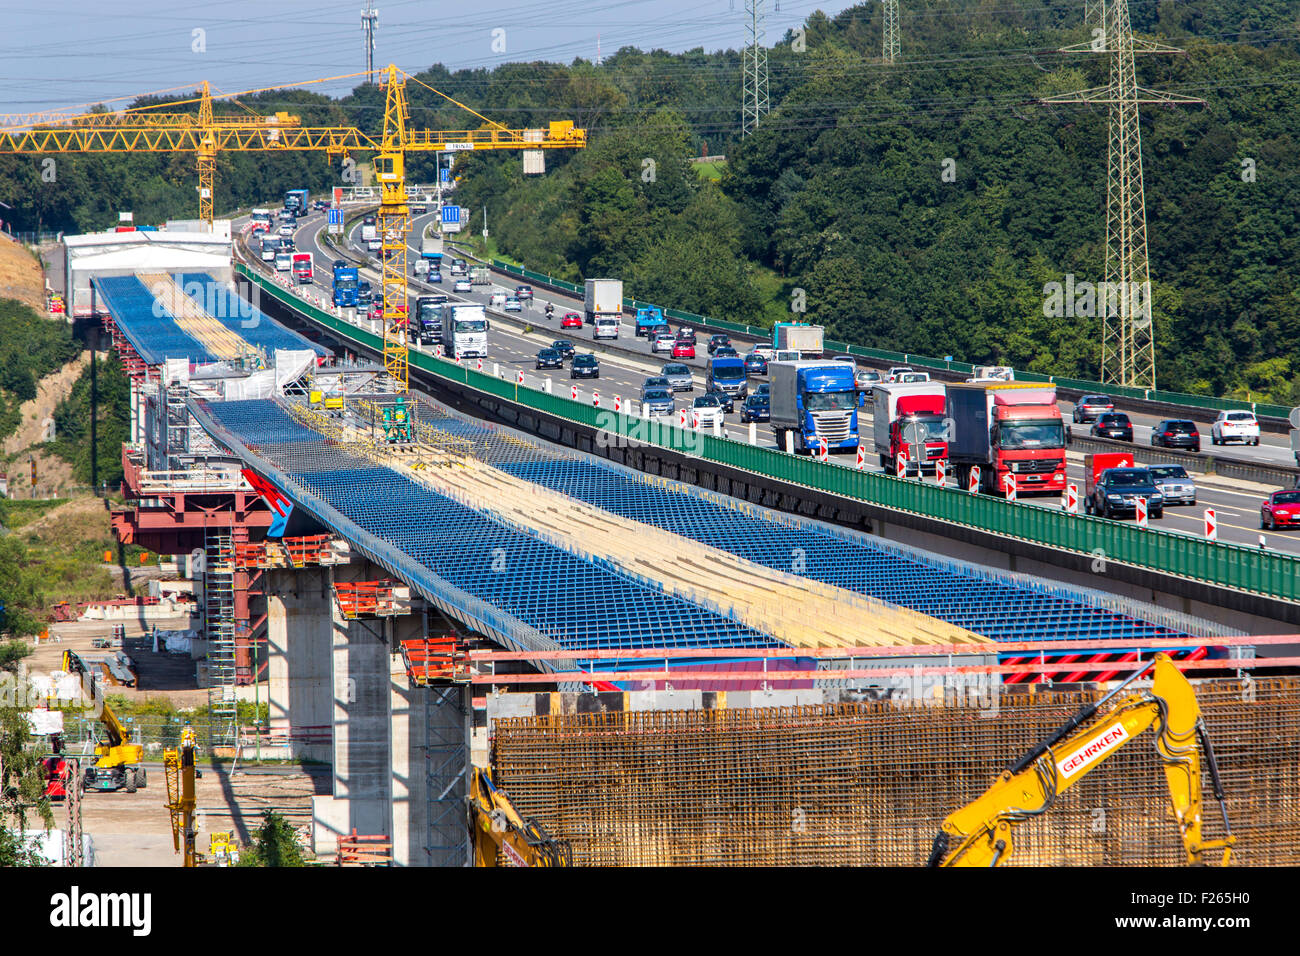 Construction of Lennetalbrücke, a  new Highway bridge,  Autobahn A45, in Hagen, Germany, the old bridge is damaged, Stock Photo